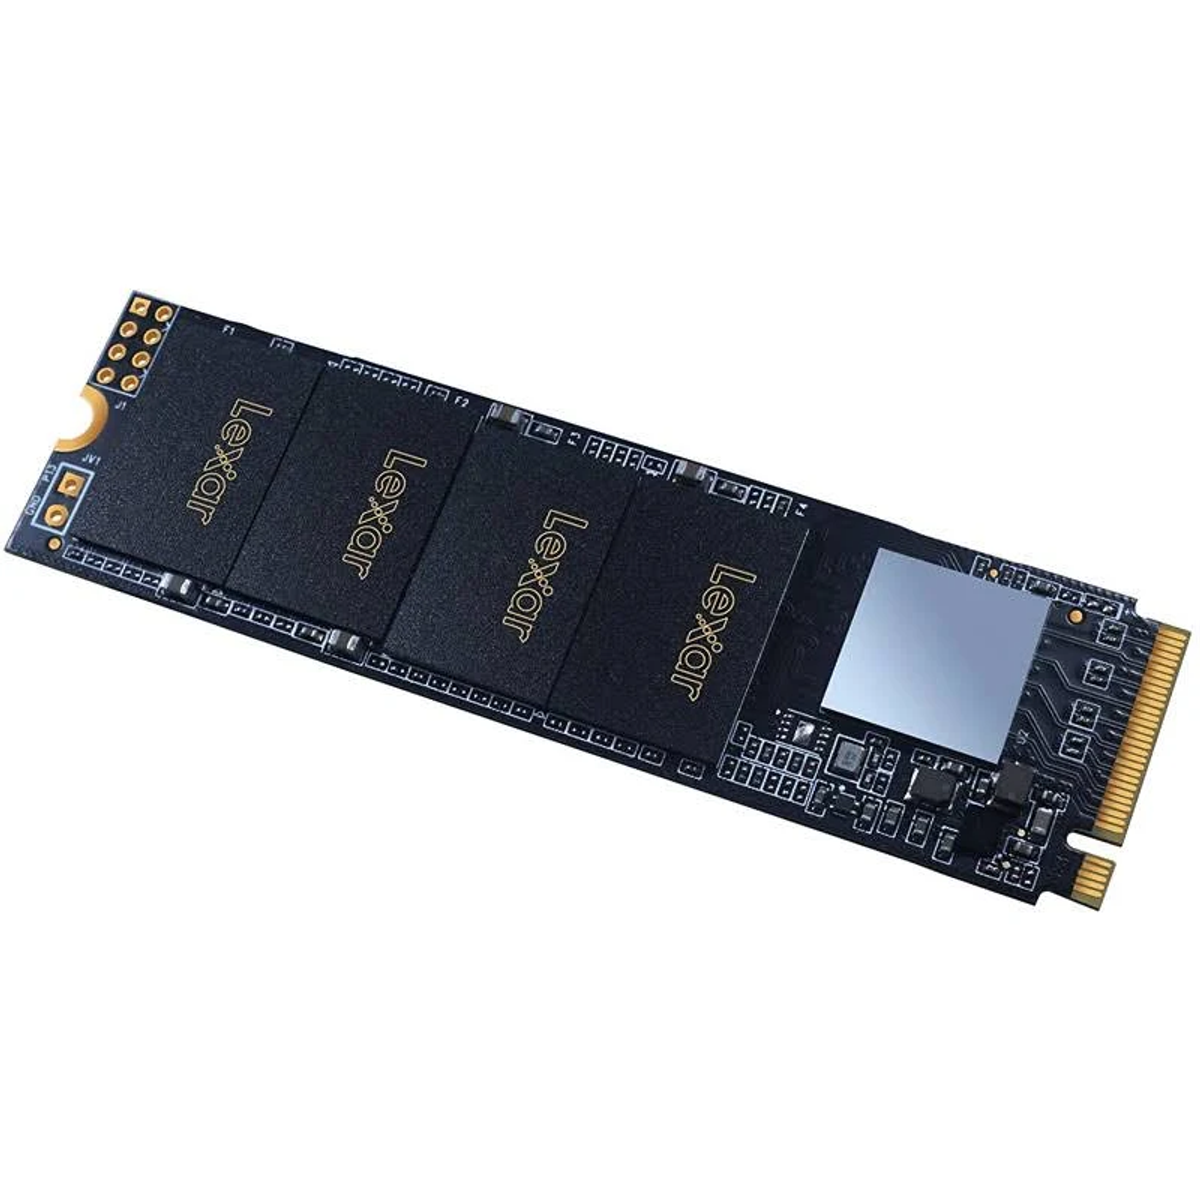 500 GB, SSD, LEXAR LNM610-500RB, intern